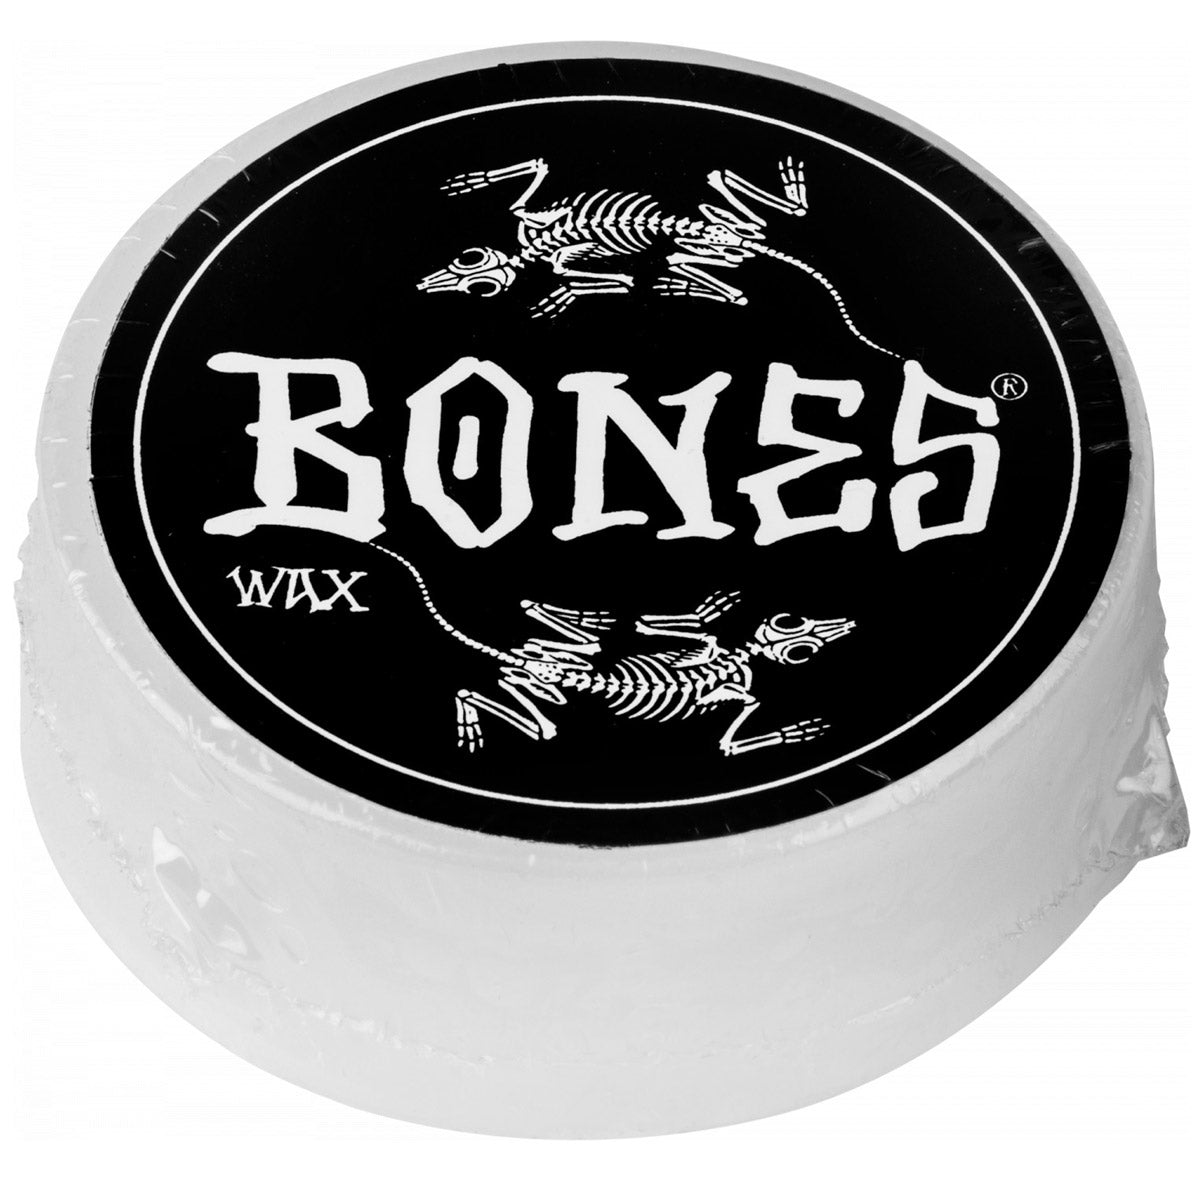 Bones Vato Rat Skate Wax image 1